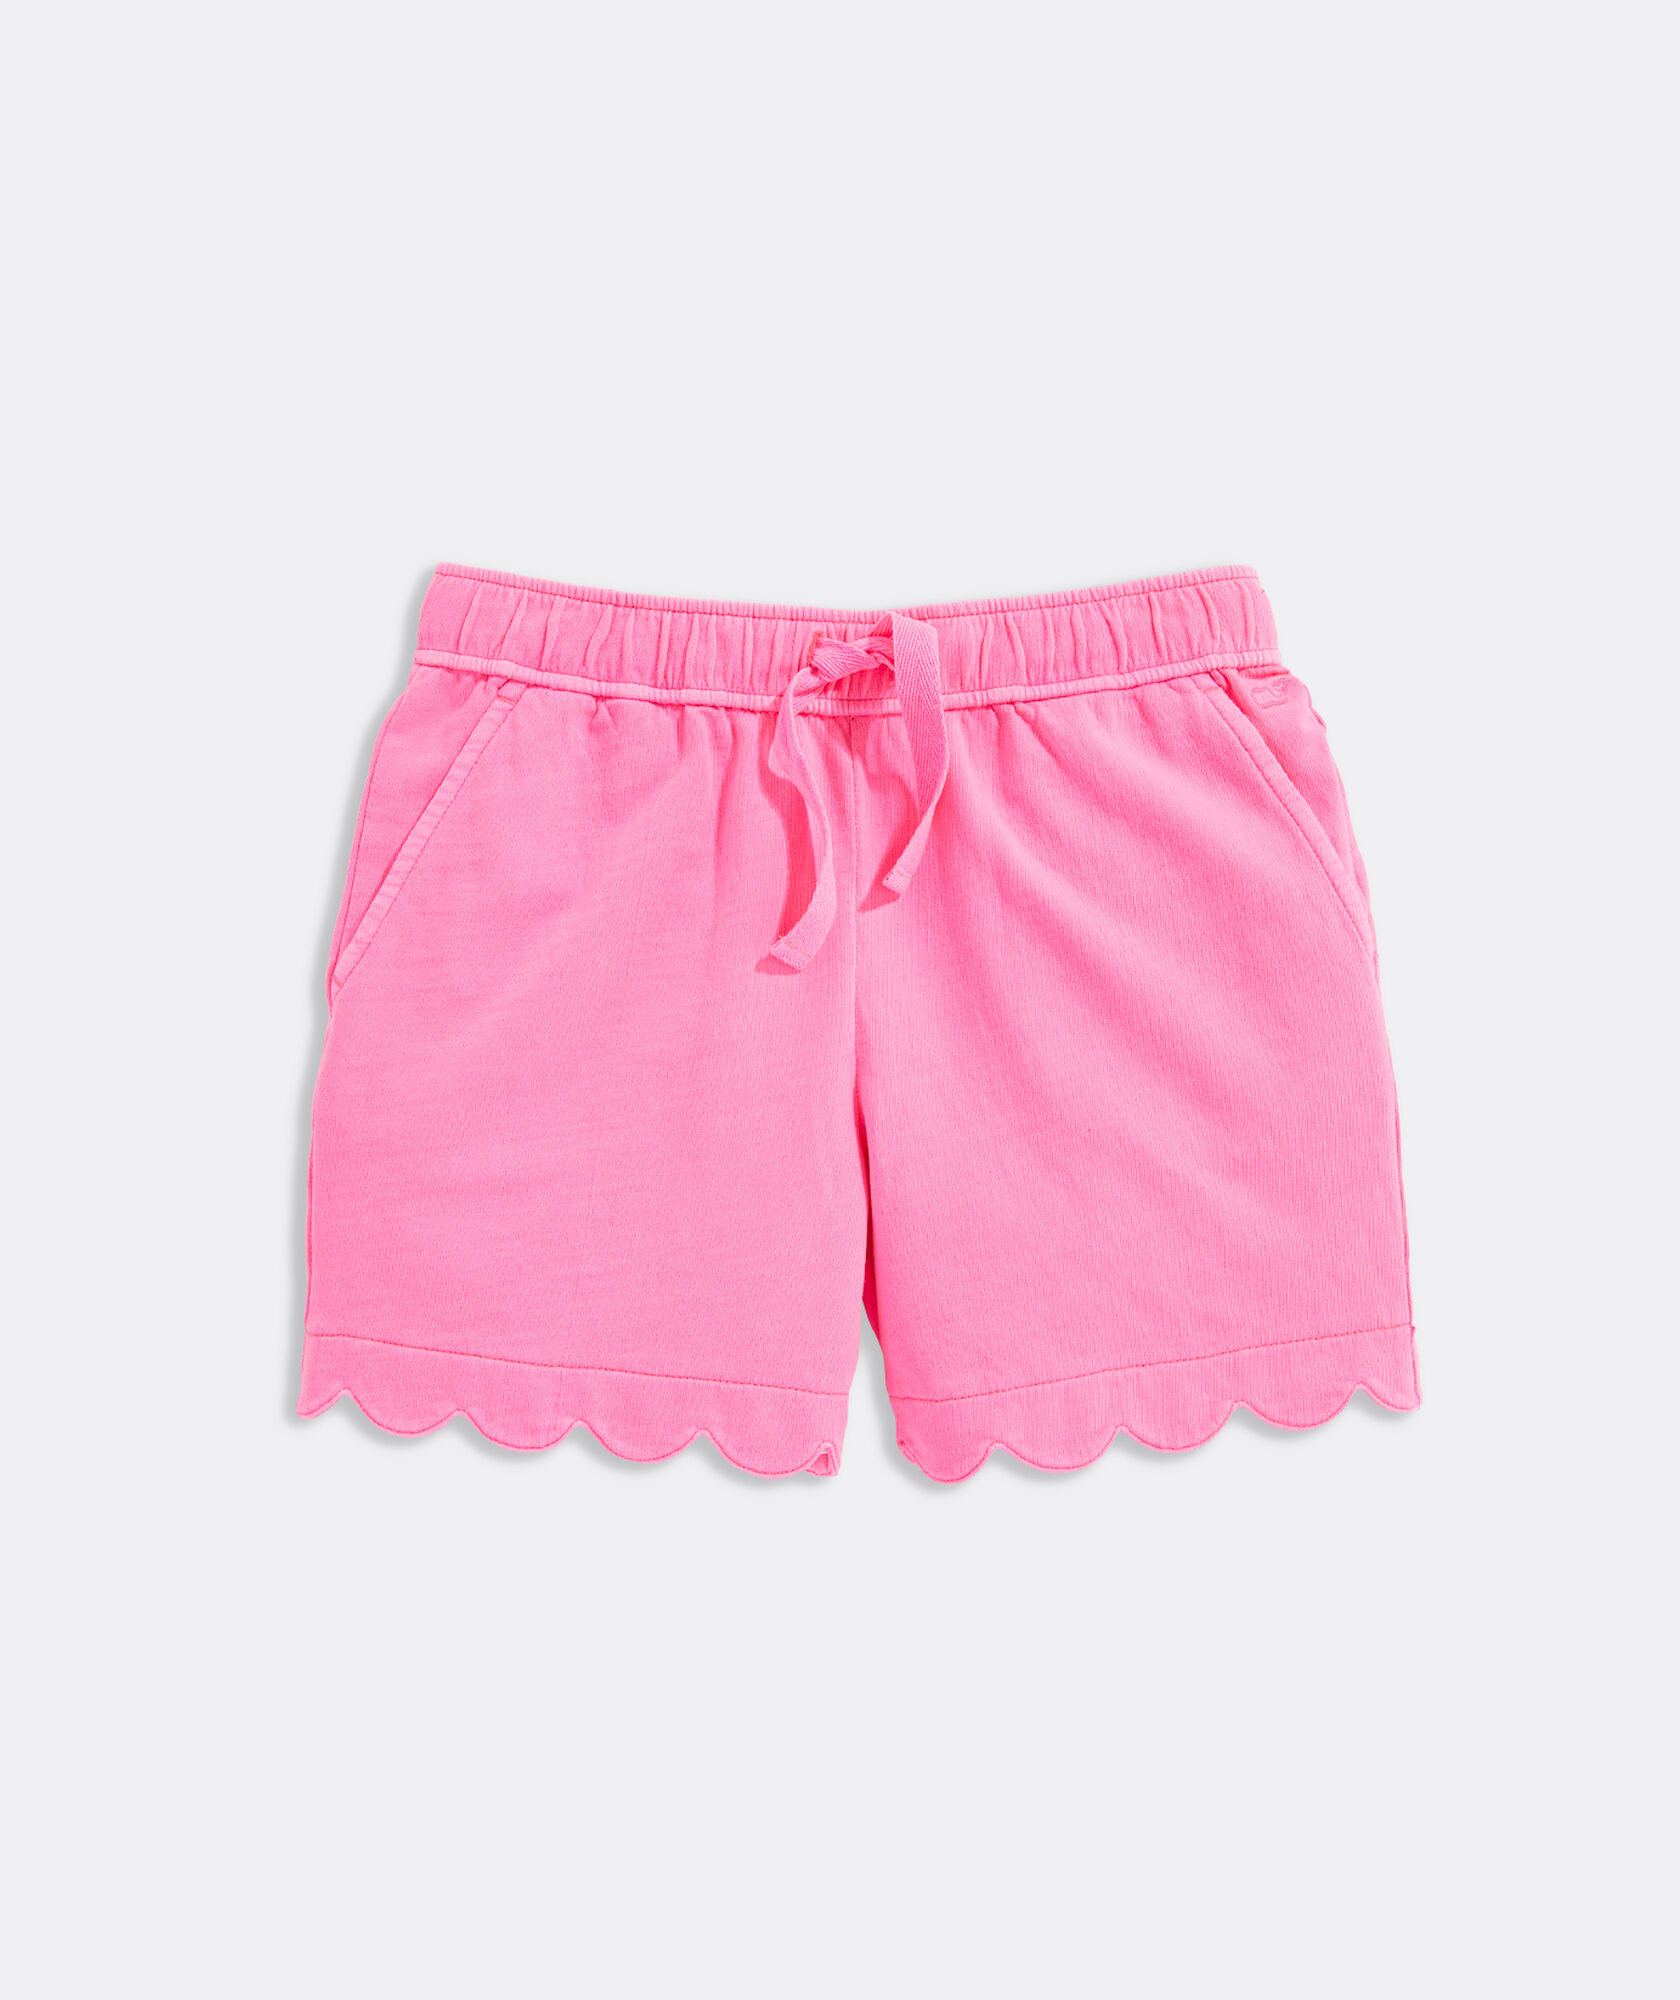 Shop Girls' Garment-Dyed Scallop Shorts at vineyard vines